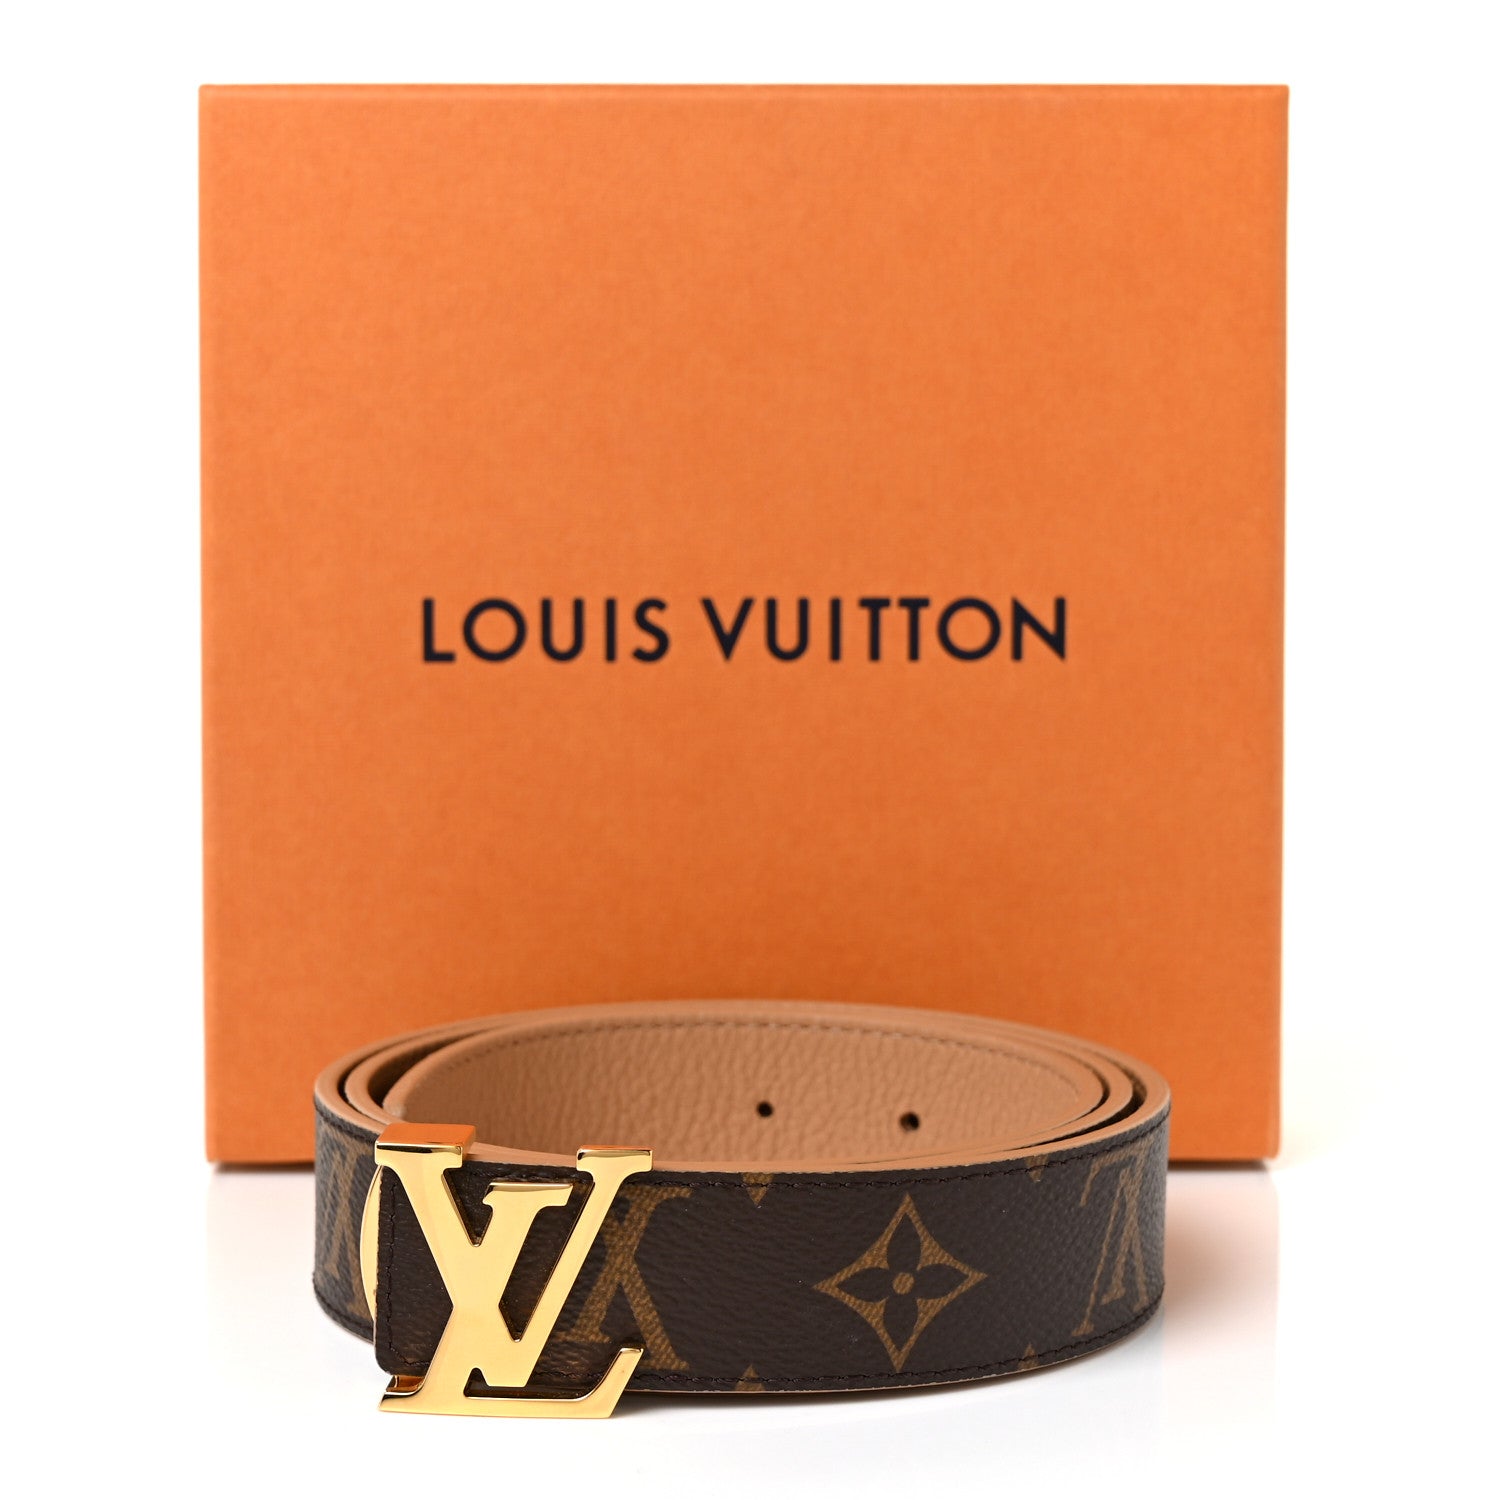 Louis Vuitton Initials Monogram Belt  Louis vuitton belt, Lv belt, Lv belt  women outfit